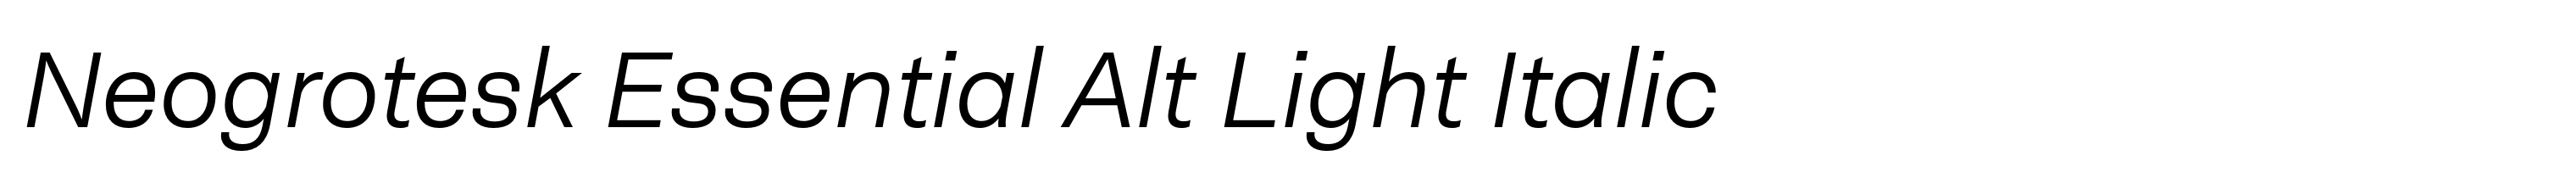 Neogrotesk Essential Alt Light Italic